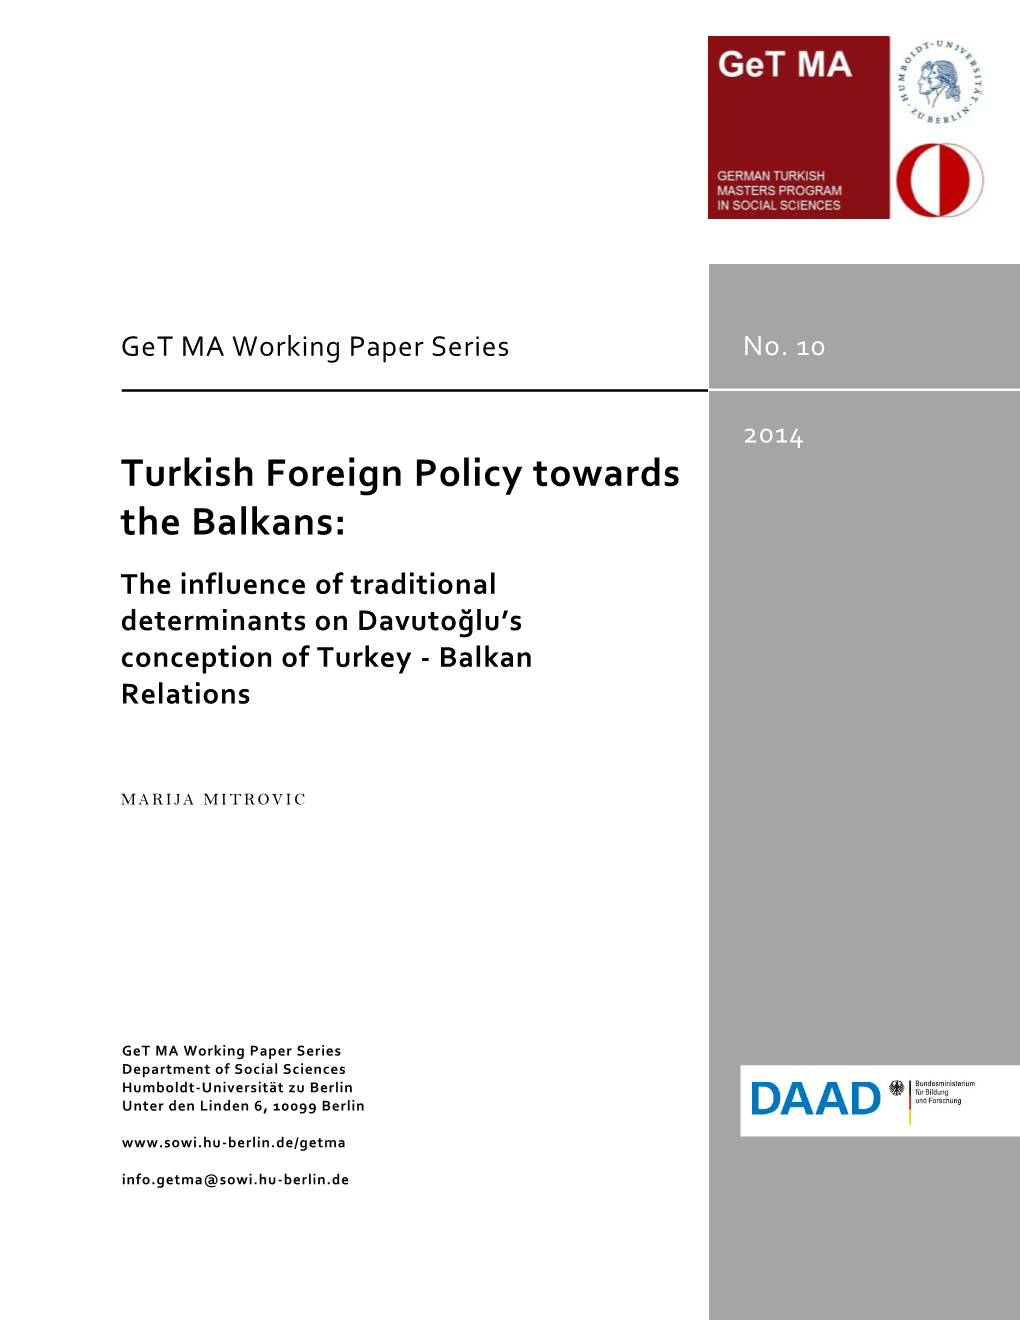 Turkish Foeign Policy Towards the Balkans